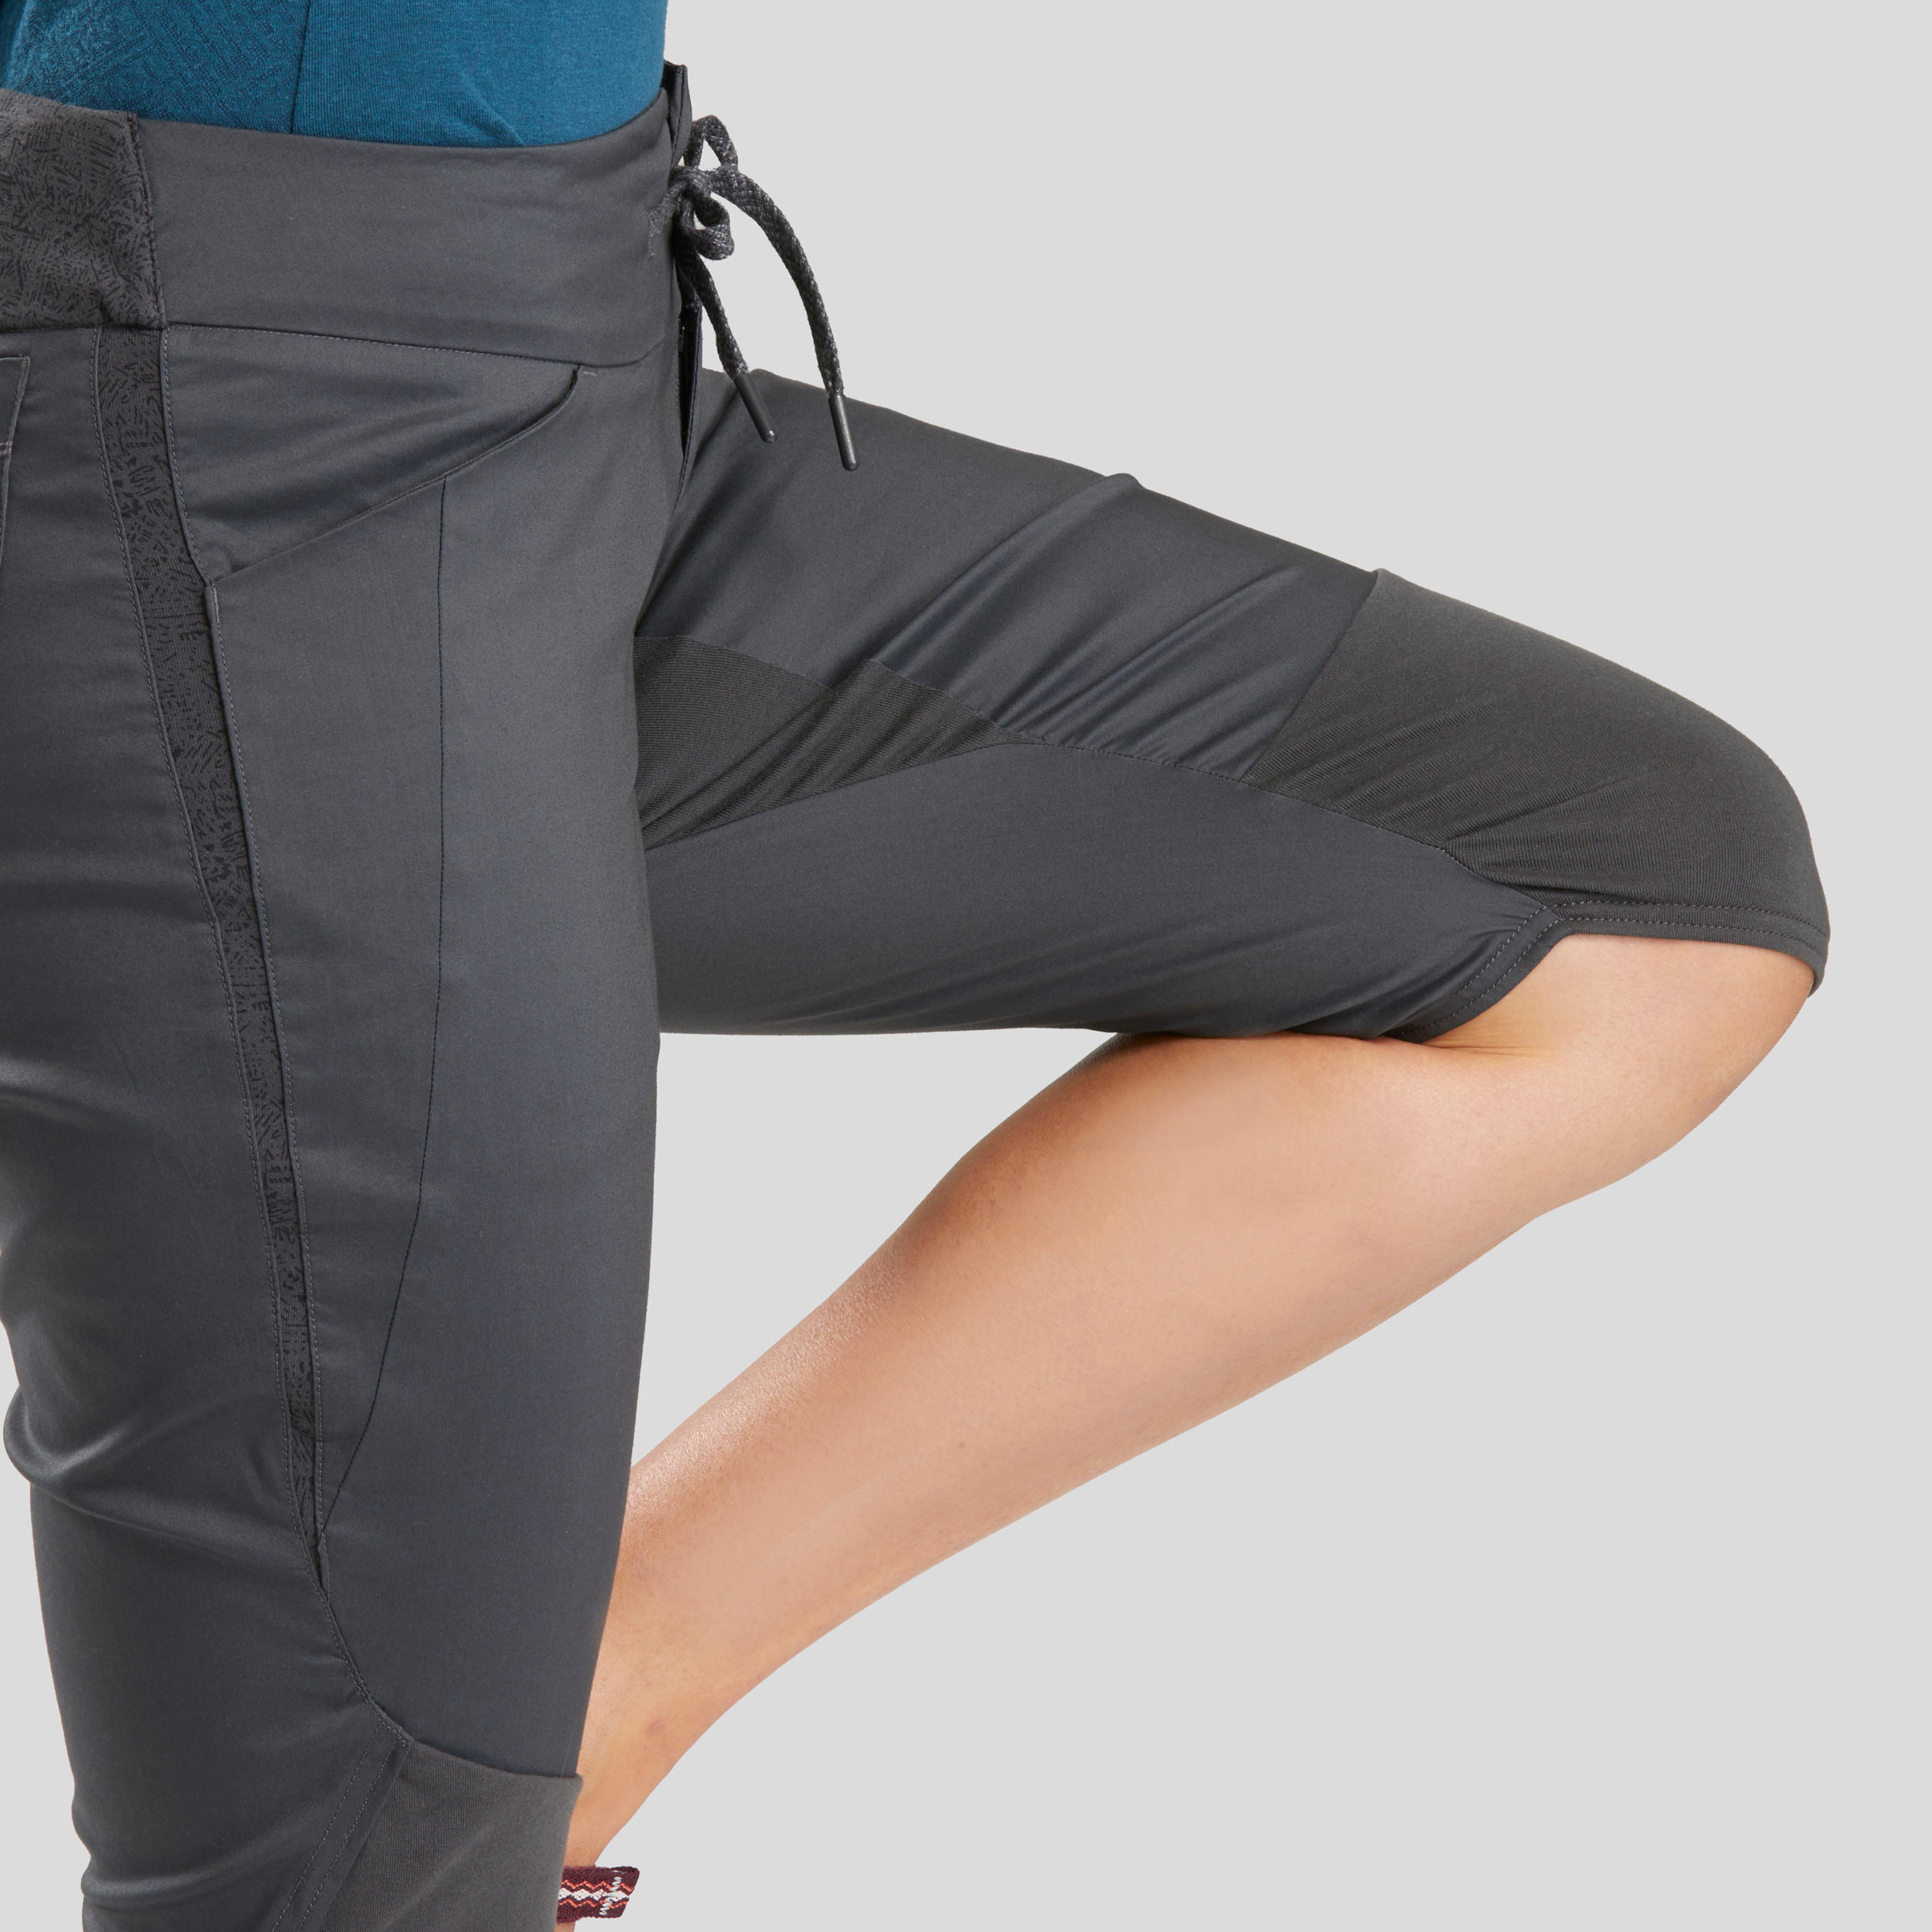 Sofra Leggings - Ladies Polyester Capri Leggings (Aqua) at Amazon Women's  Clothing store